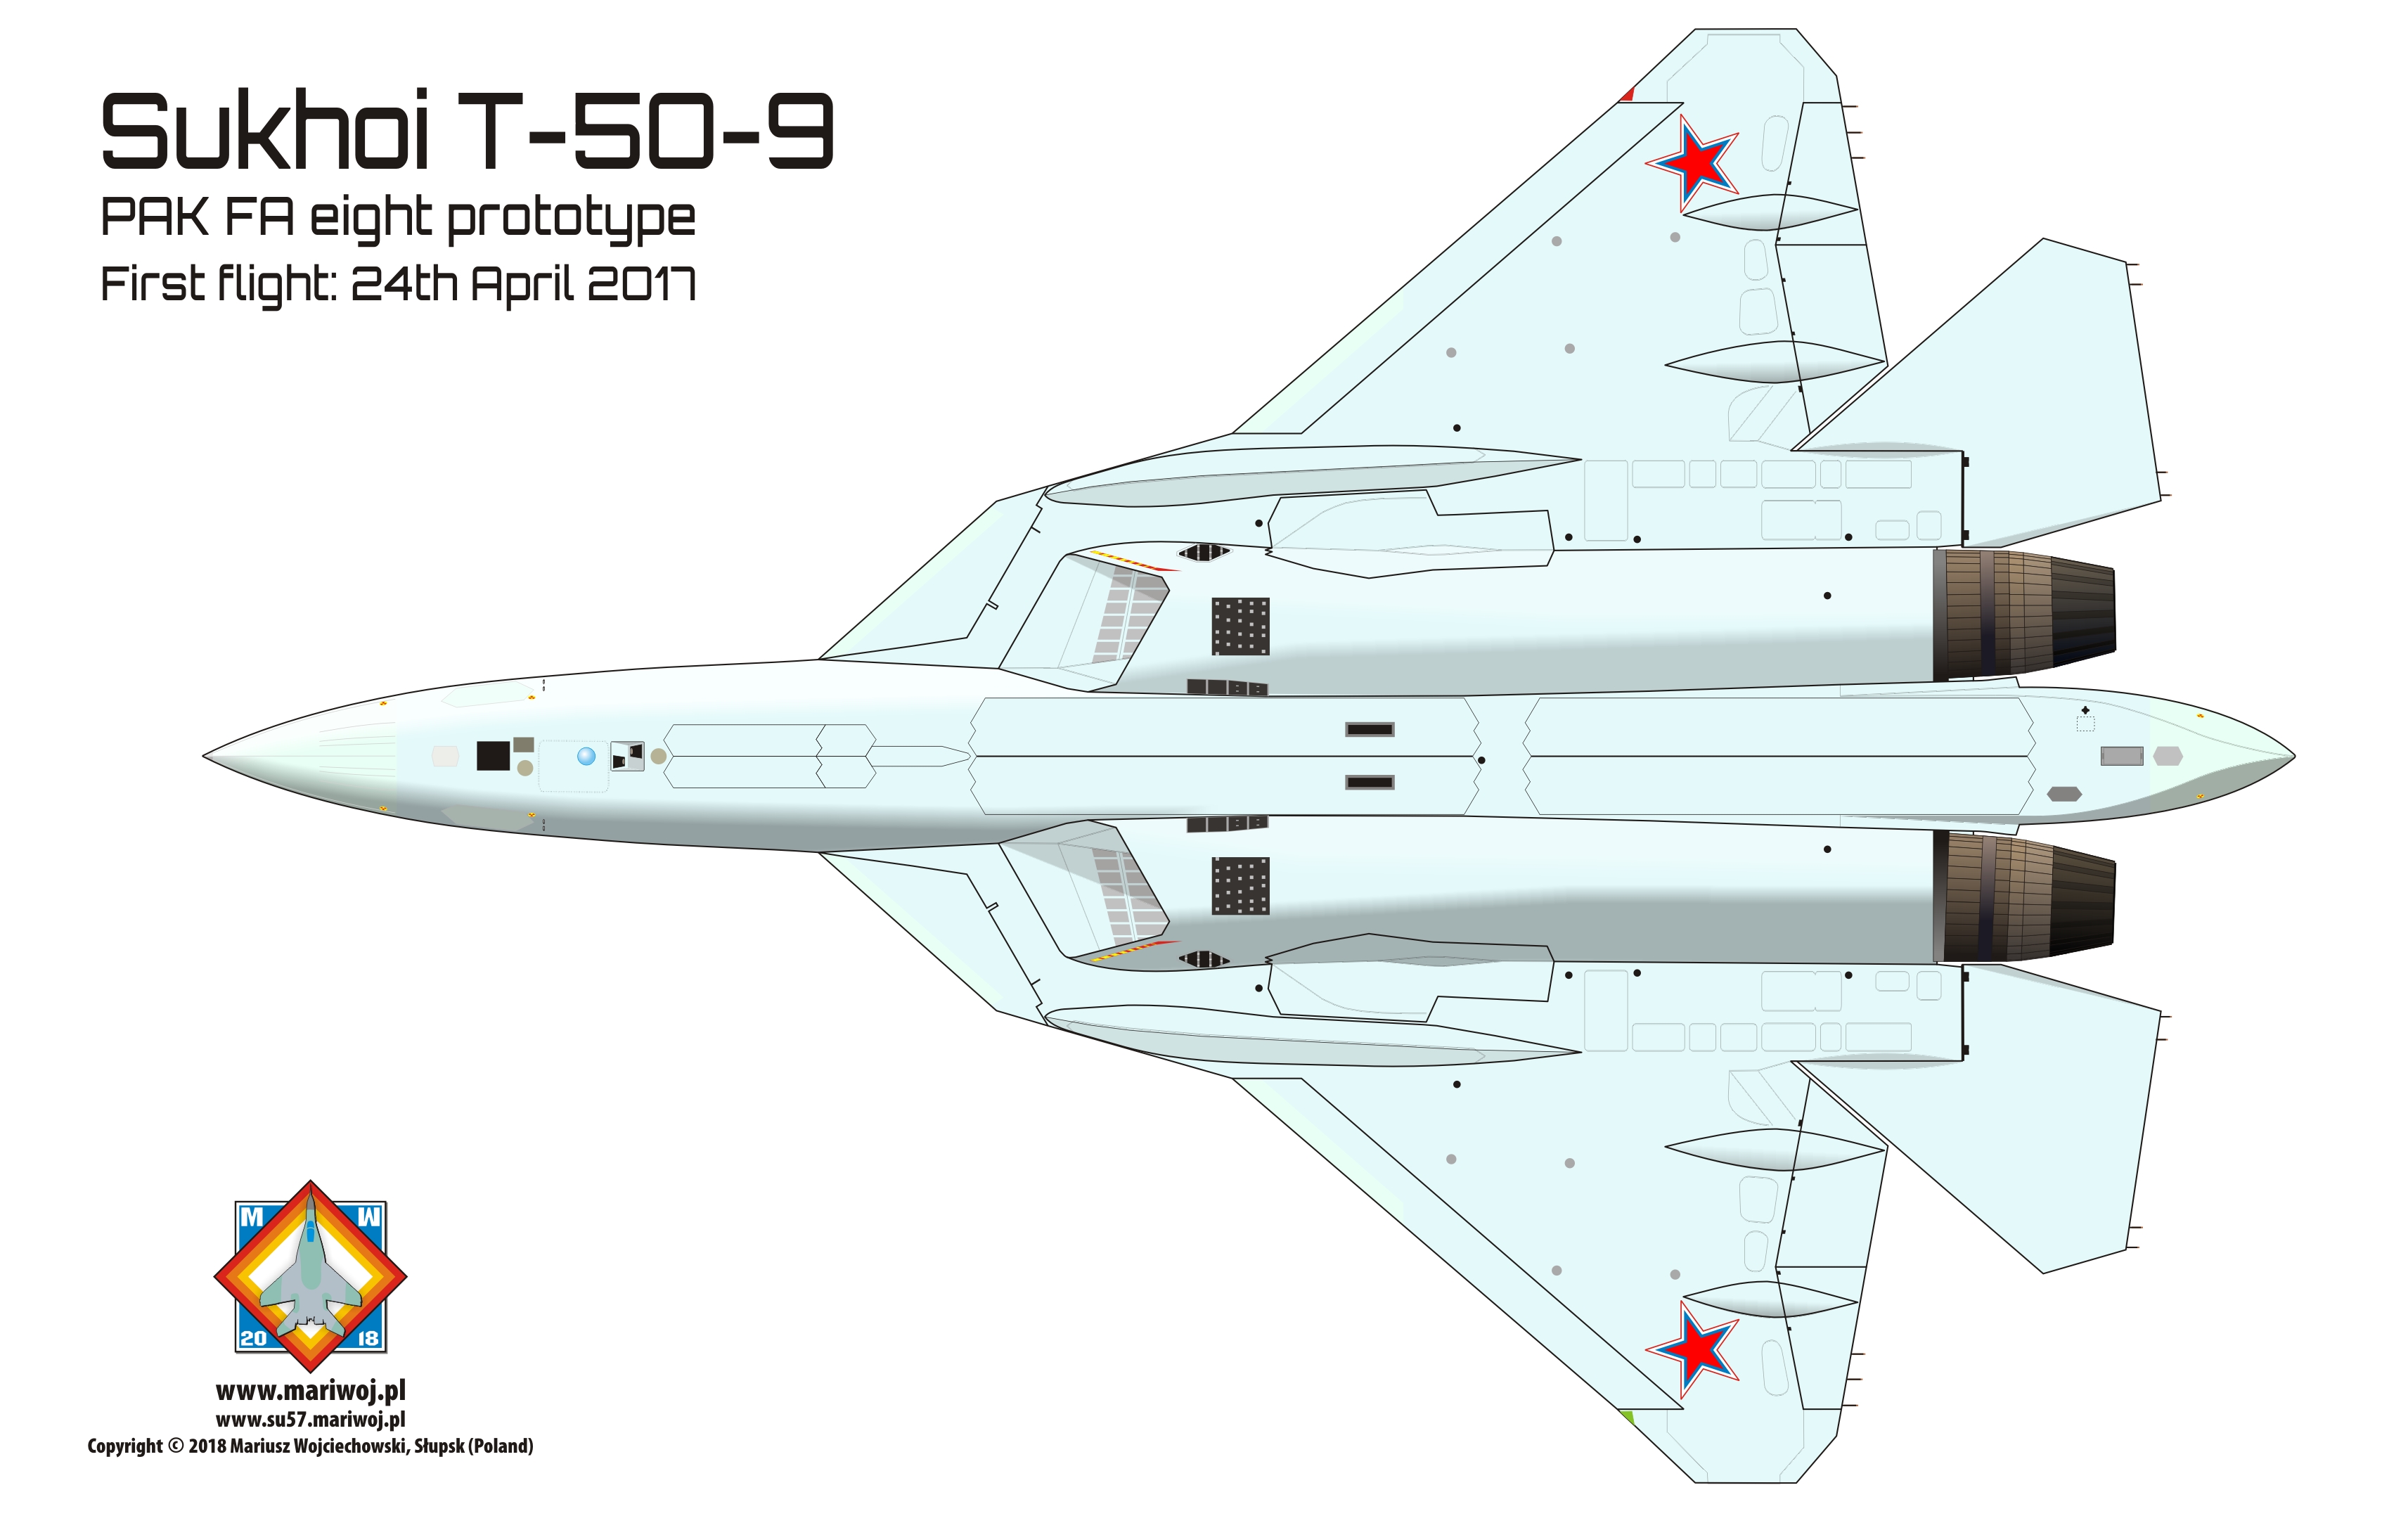 Sukhoi Su-57 PAK FA T-50 prototype